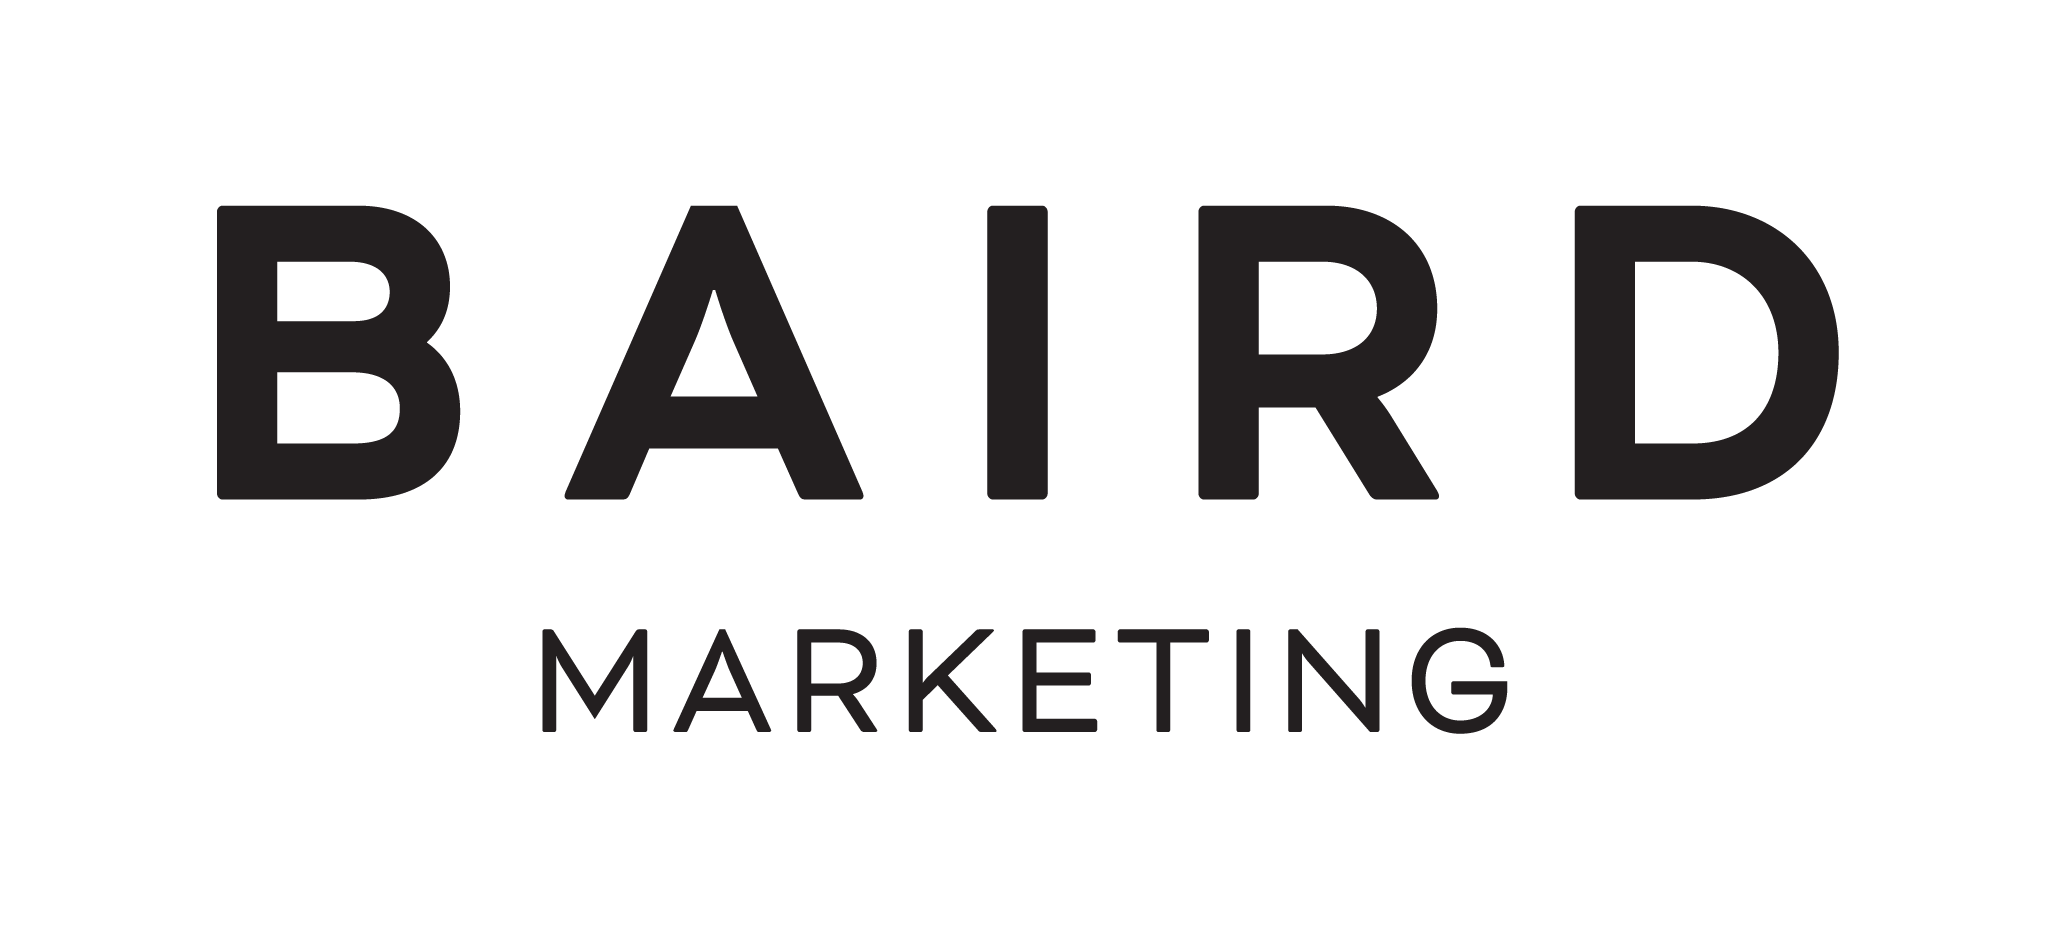 Baird Marketing logo